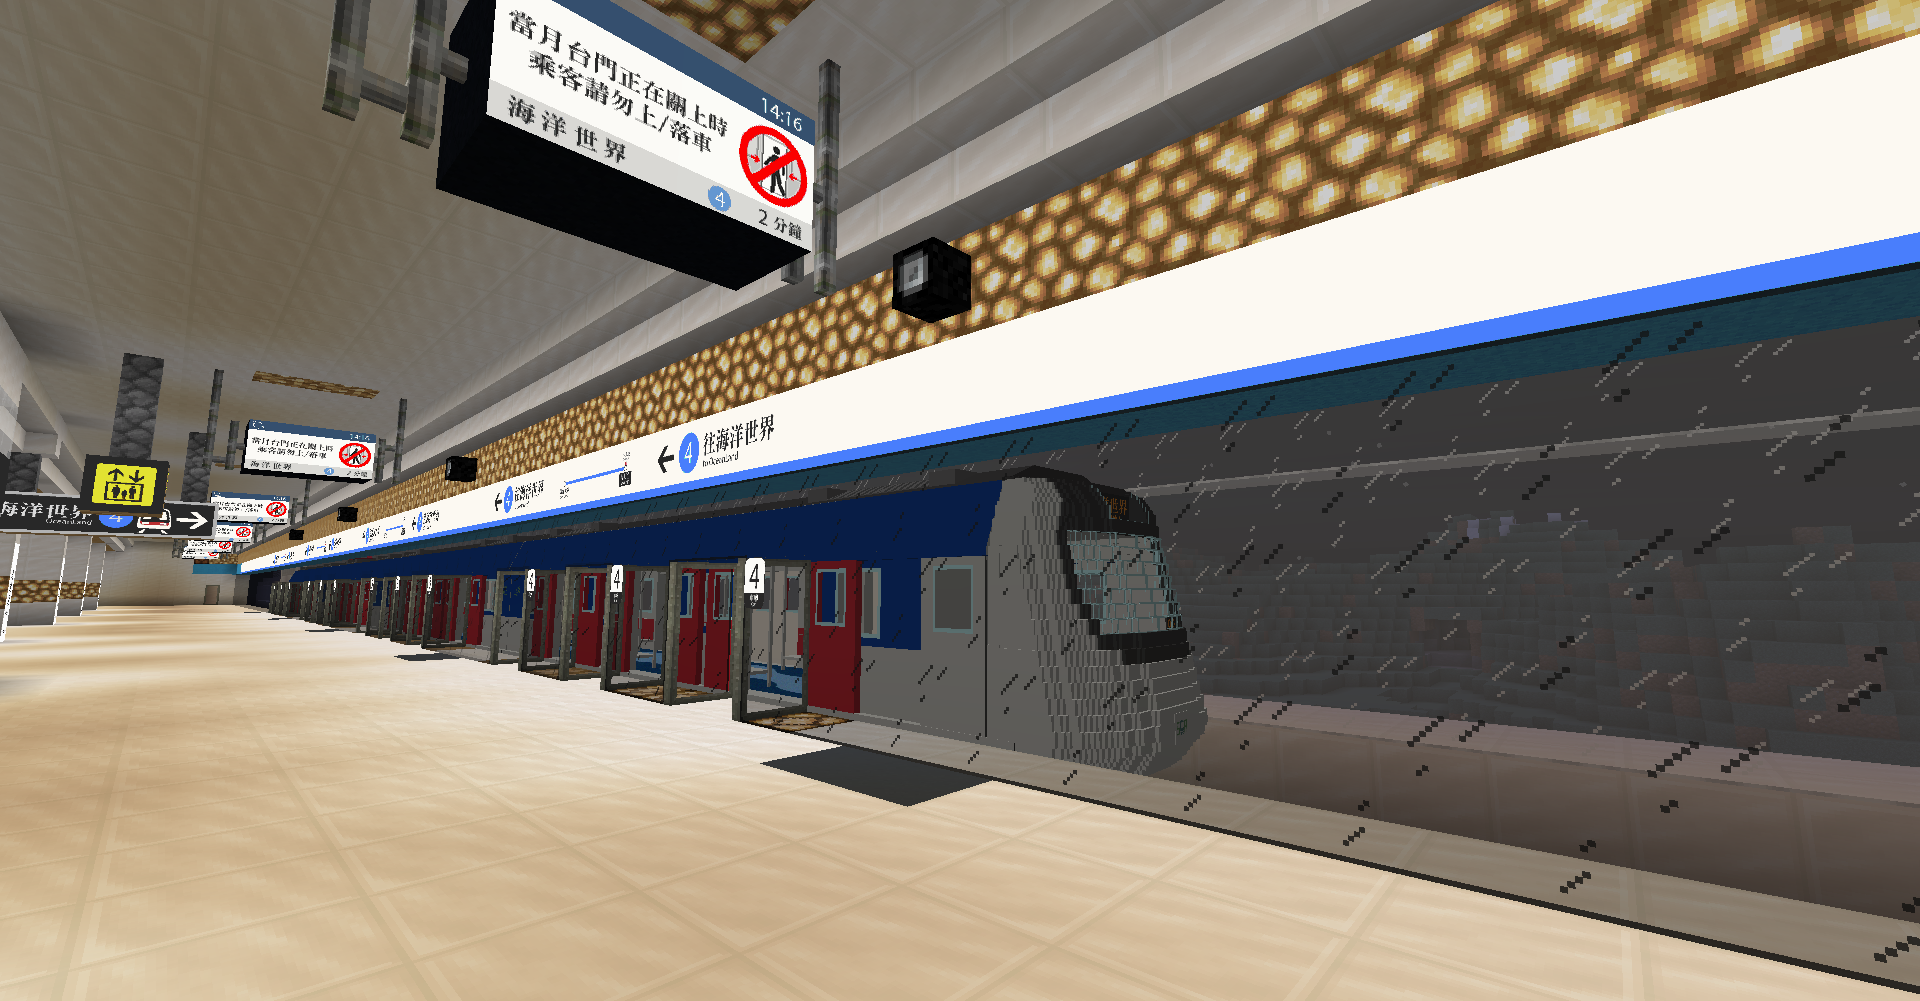 SCR Whitehill Station Platform 4